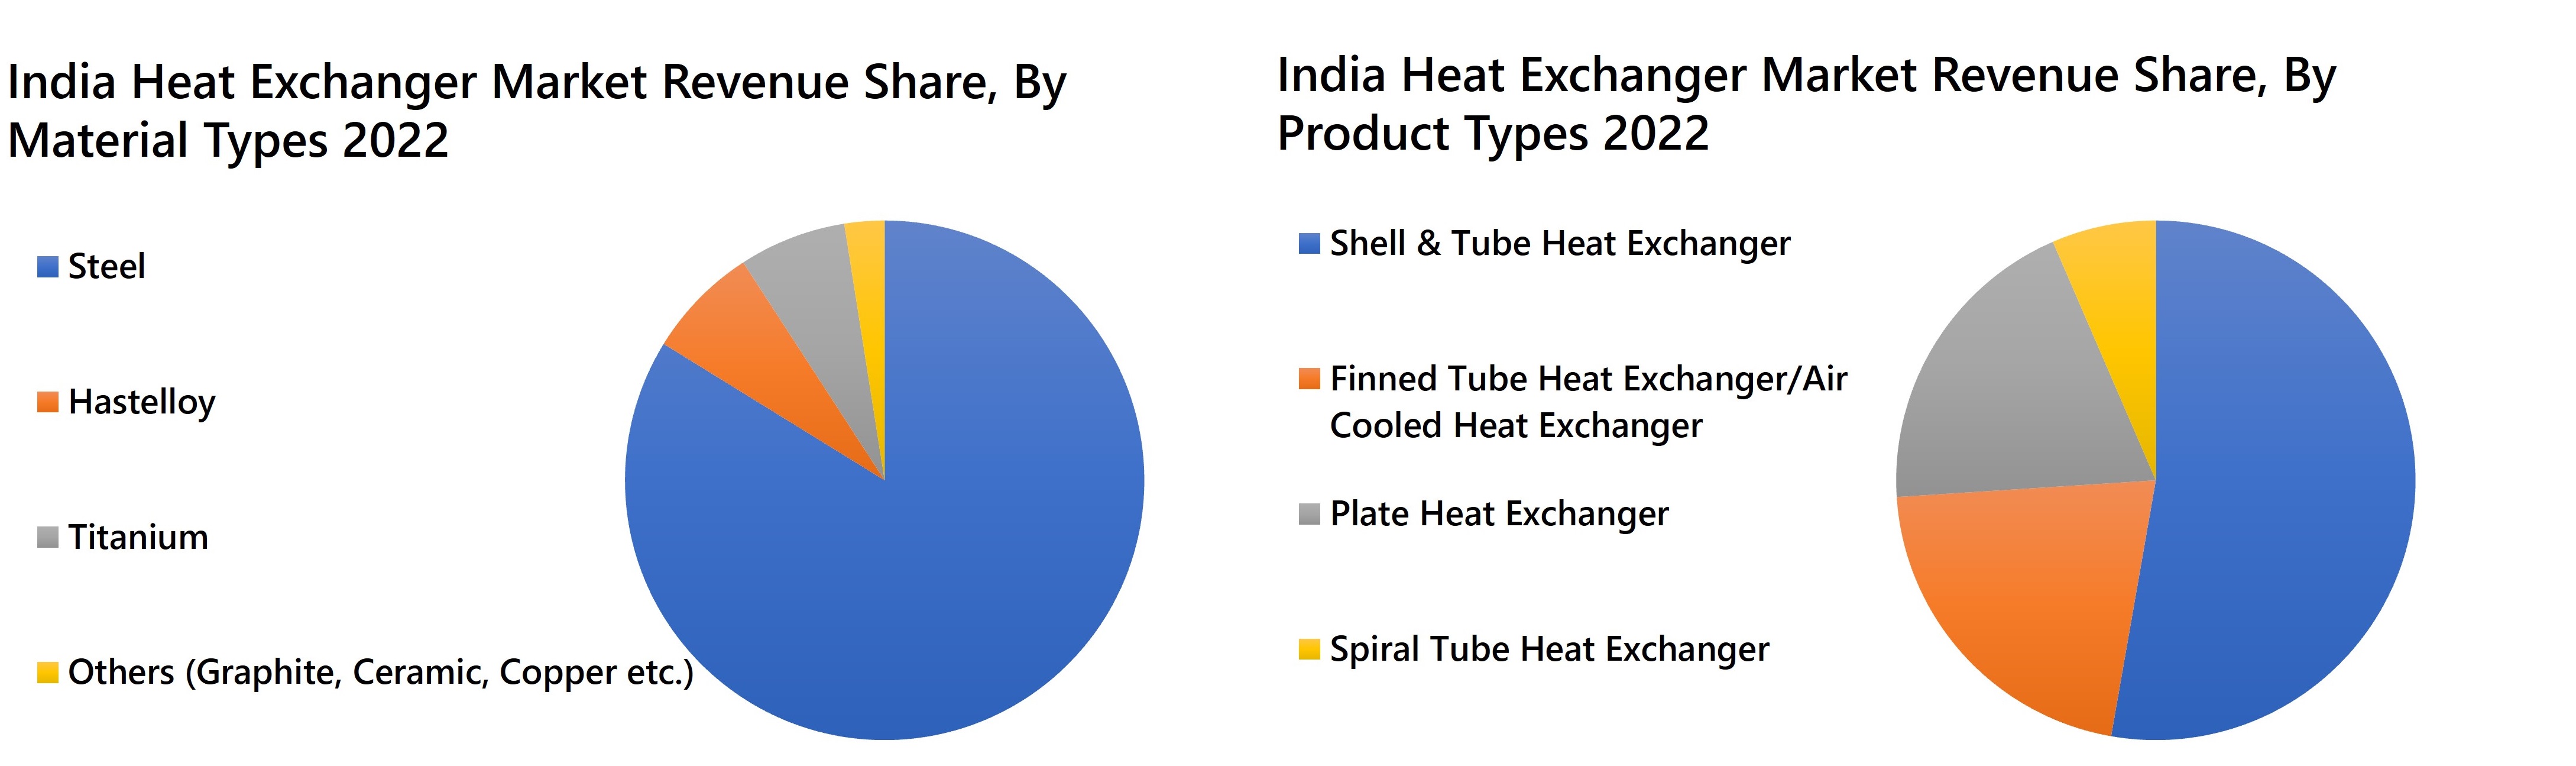 India Heat Exchanger Market Revenue Share